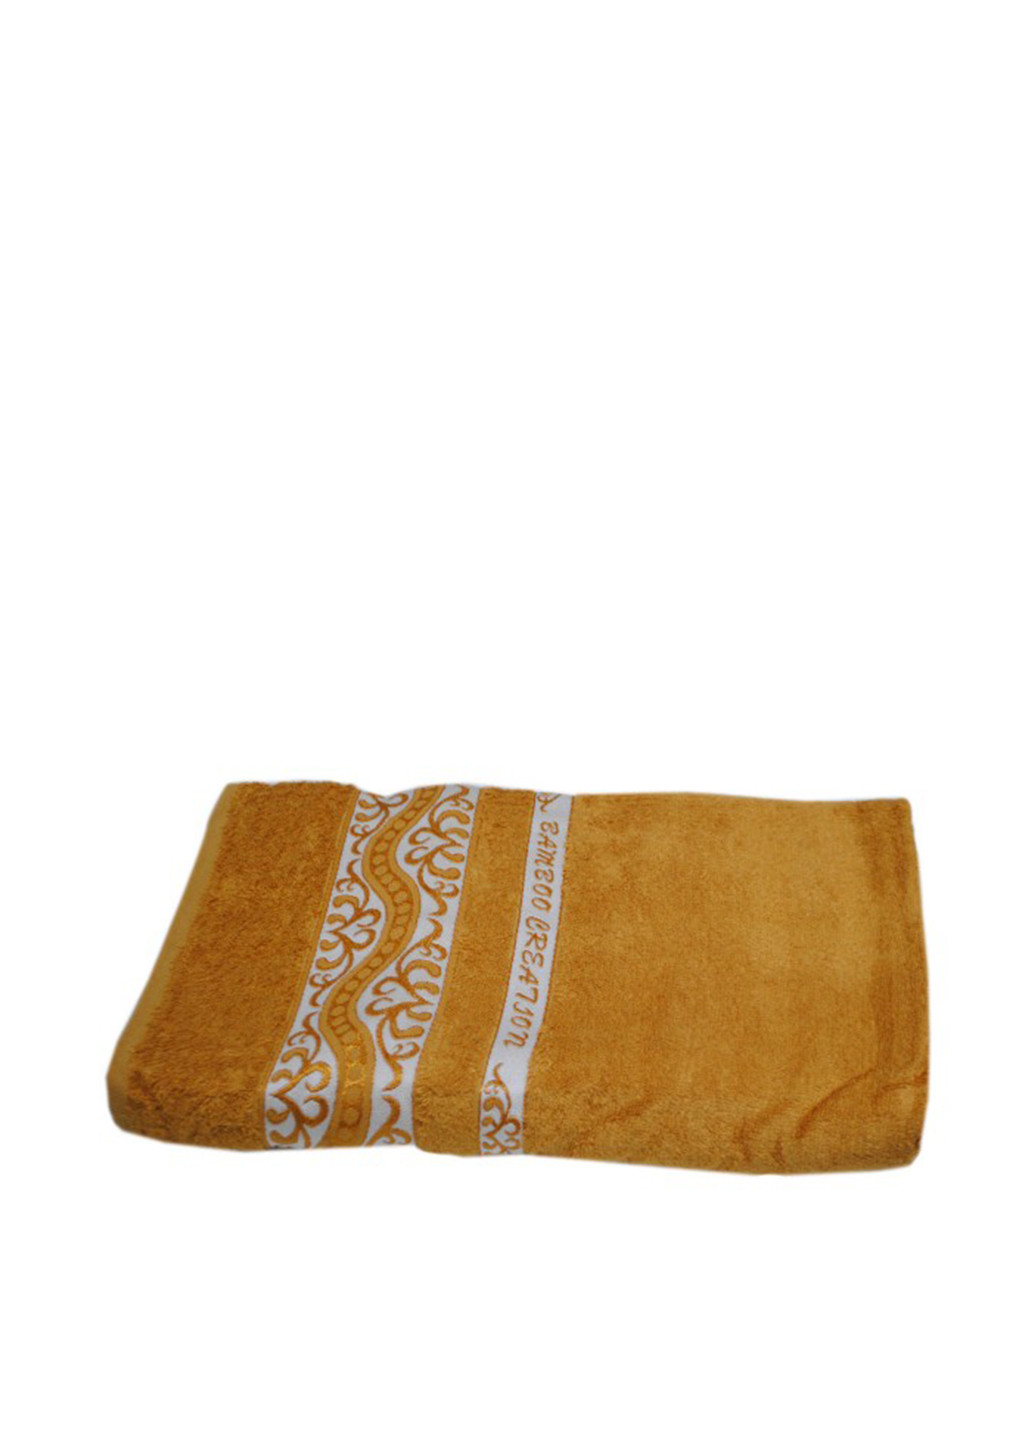 JULIA полотенце, 70х140 см орнамент горчичный производство - Турция